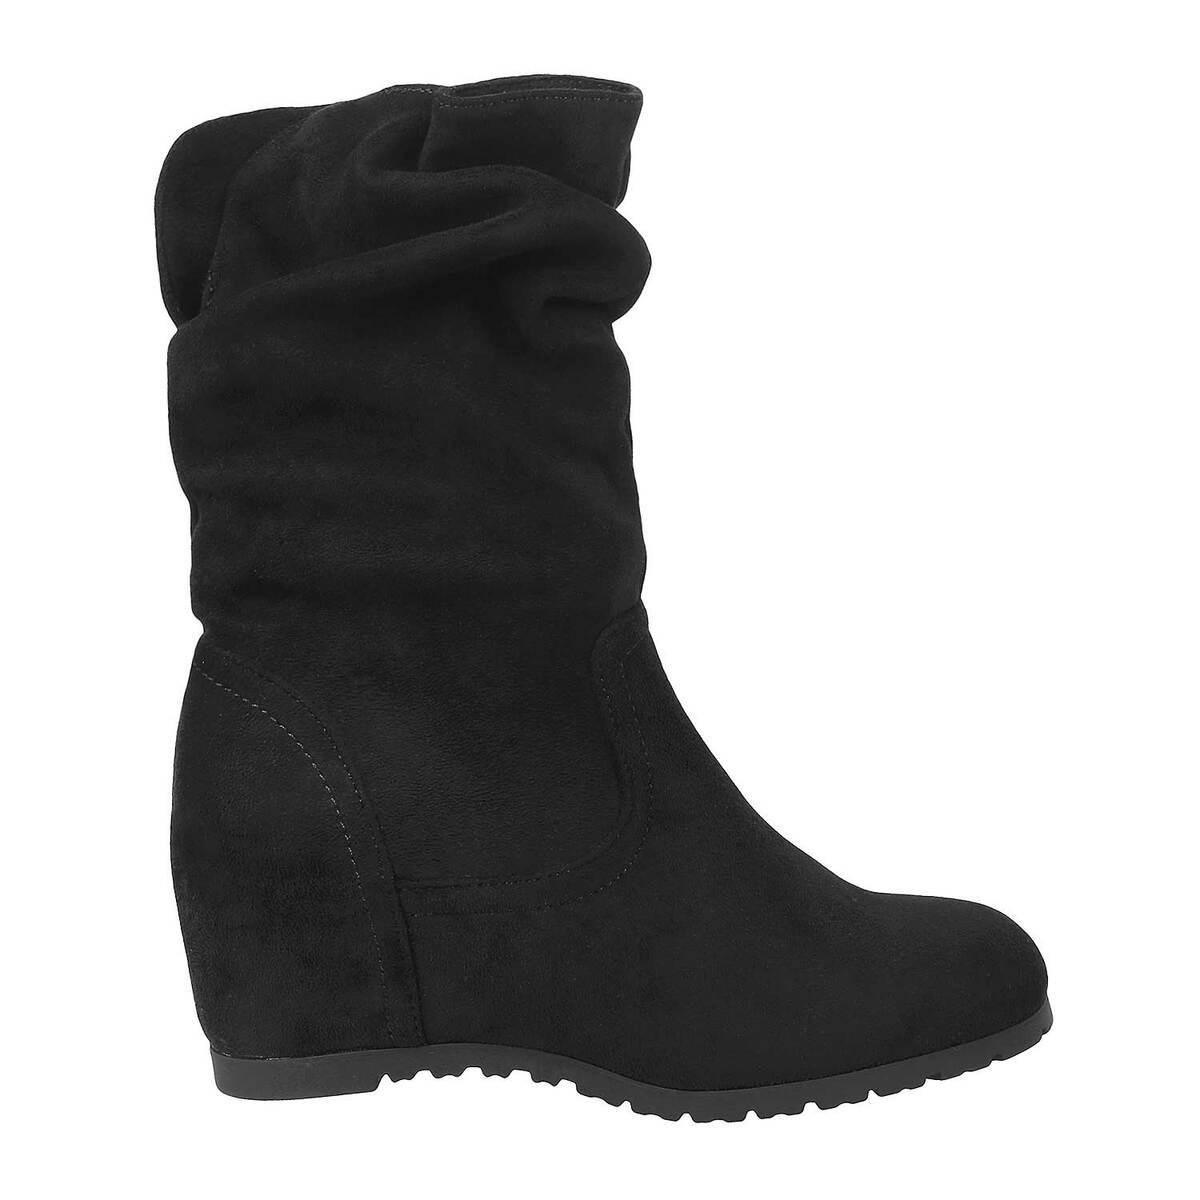 Buy Women Black Party Boots Online | SKU: 31-9482-11-36-Metro Shoes